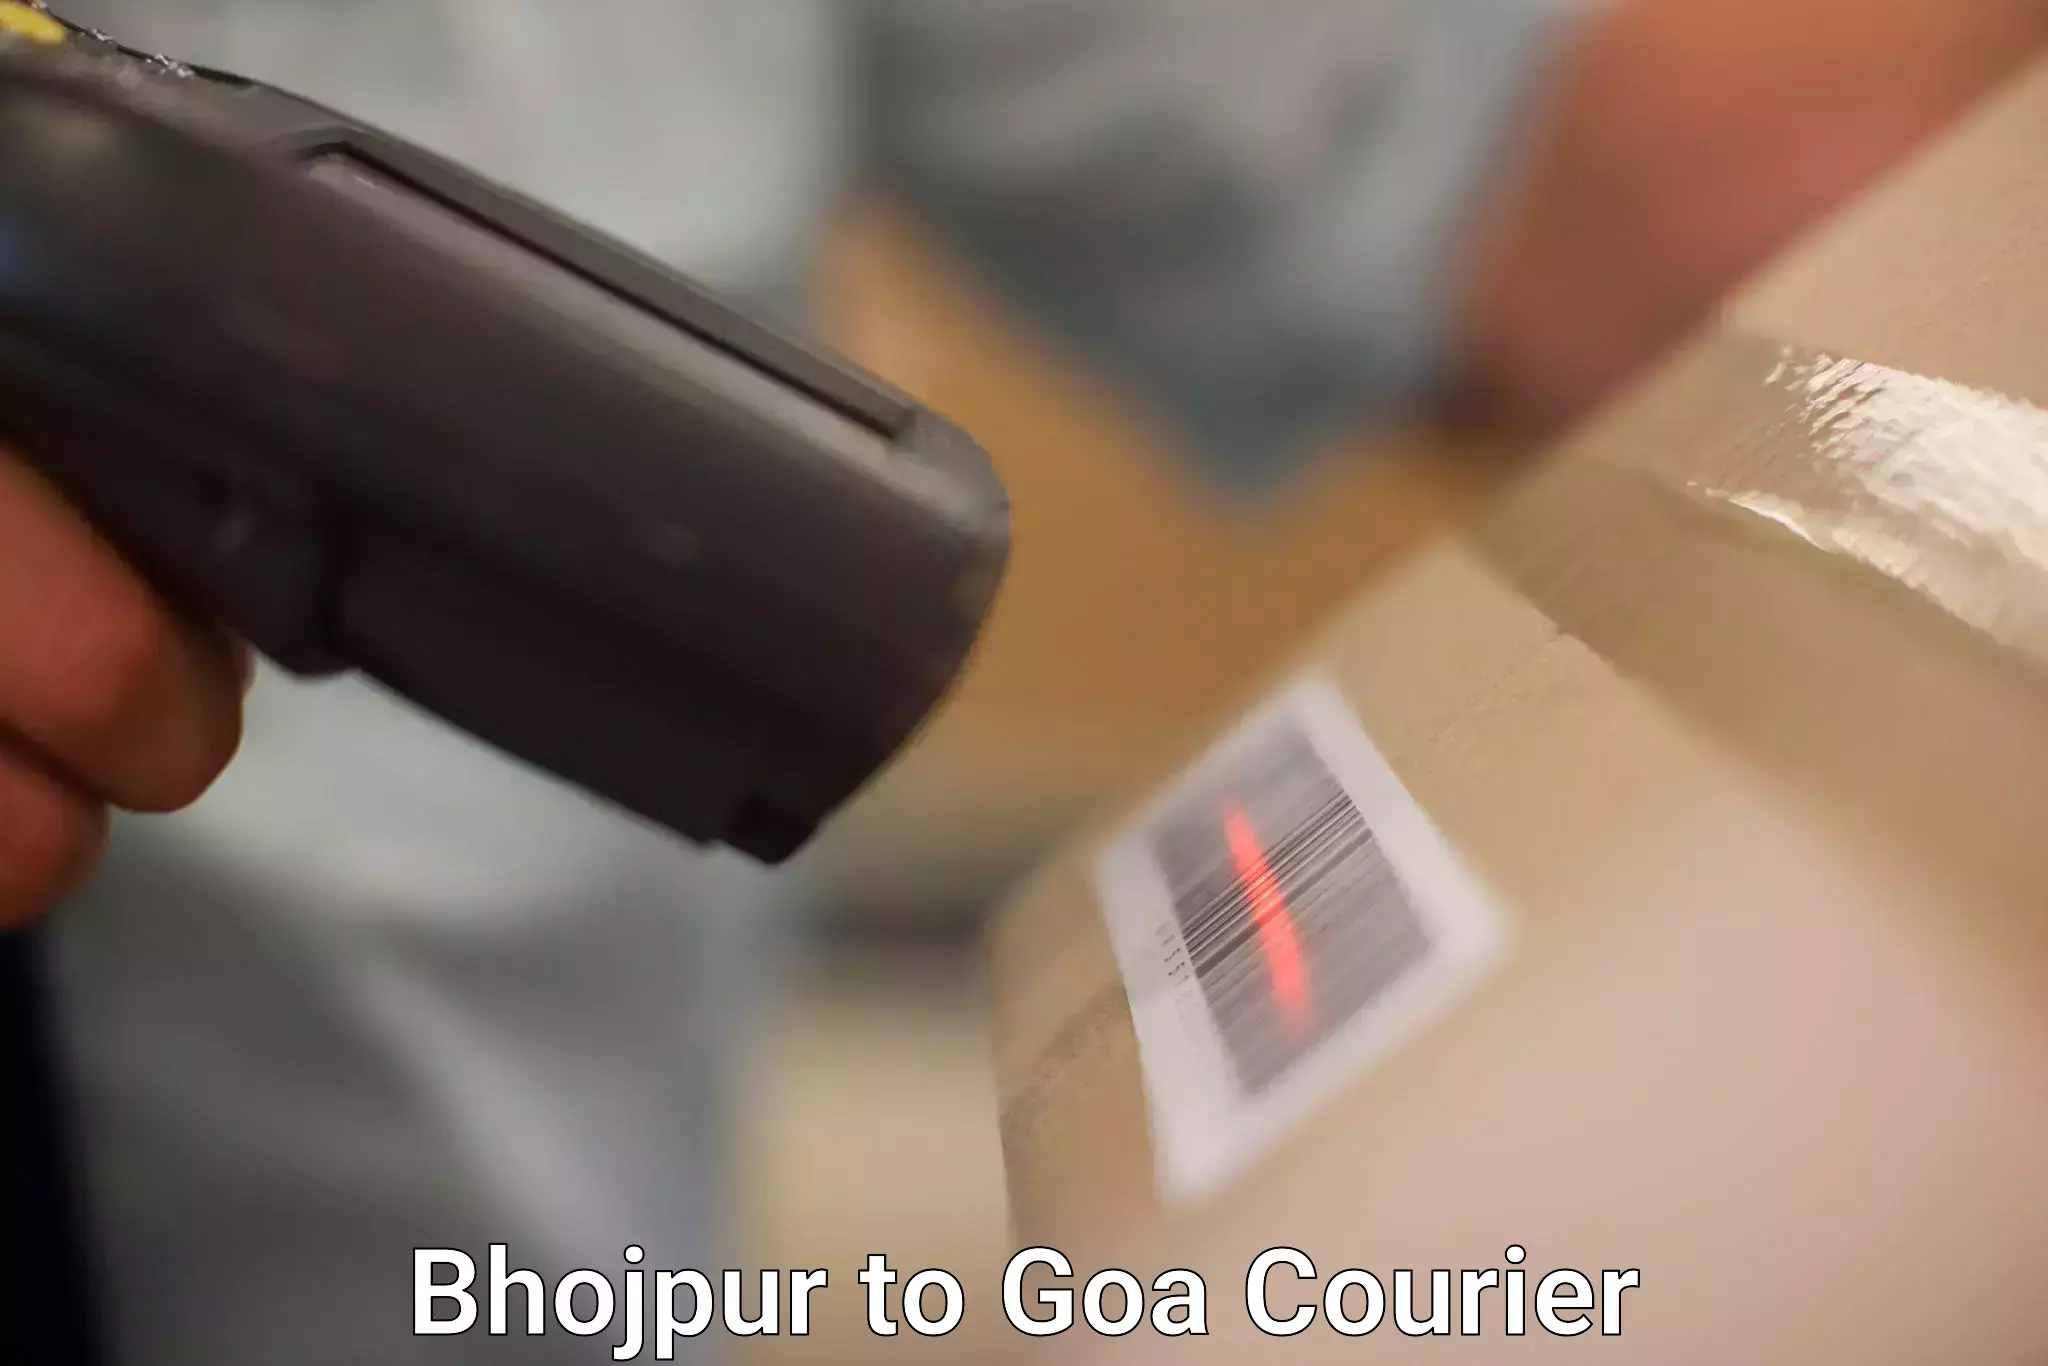 Enhanced tracking features Bhojpur to Goa